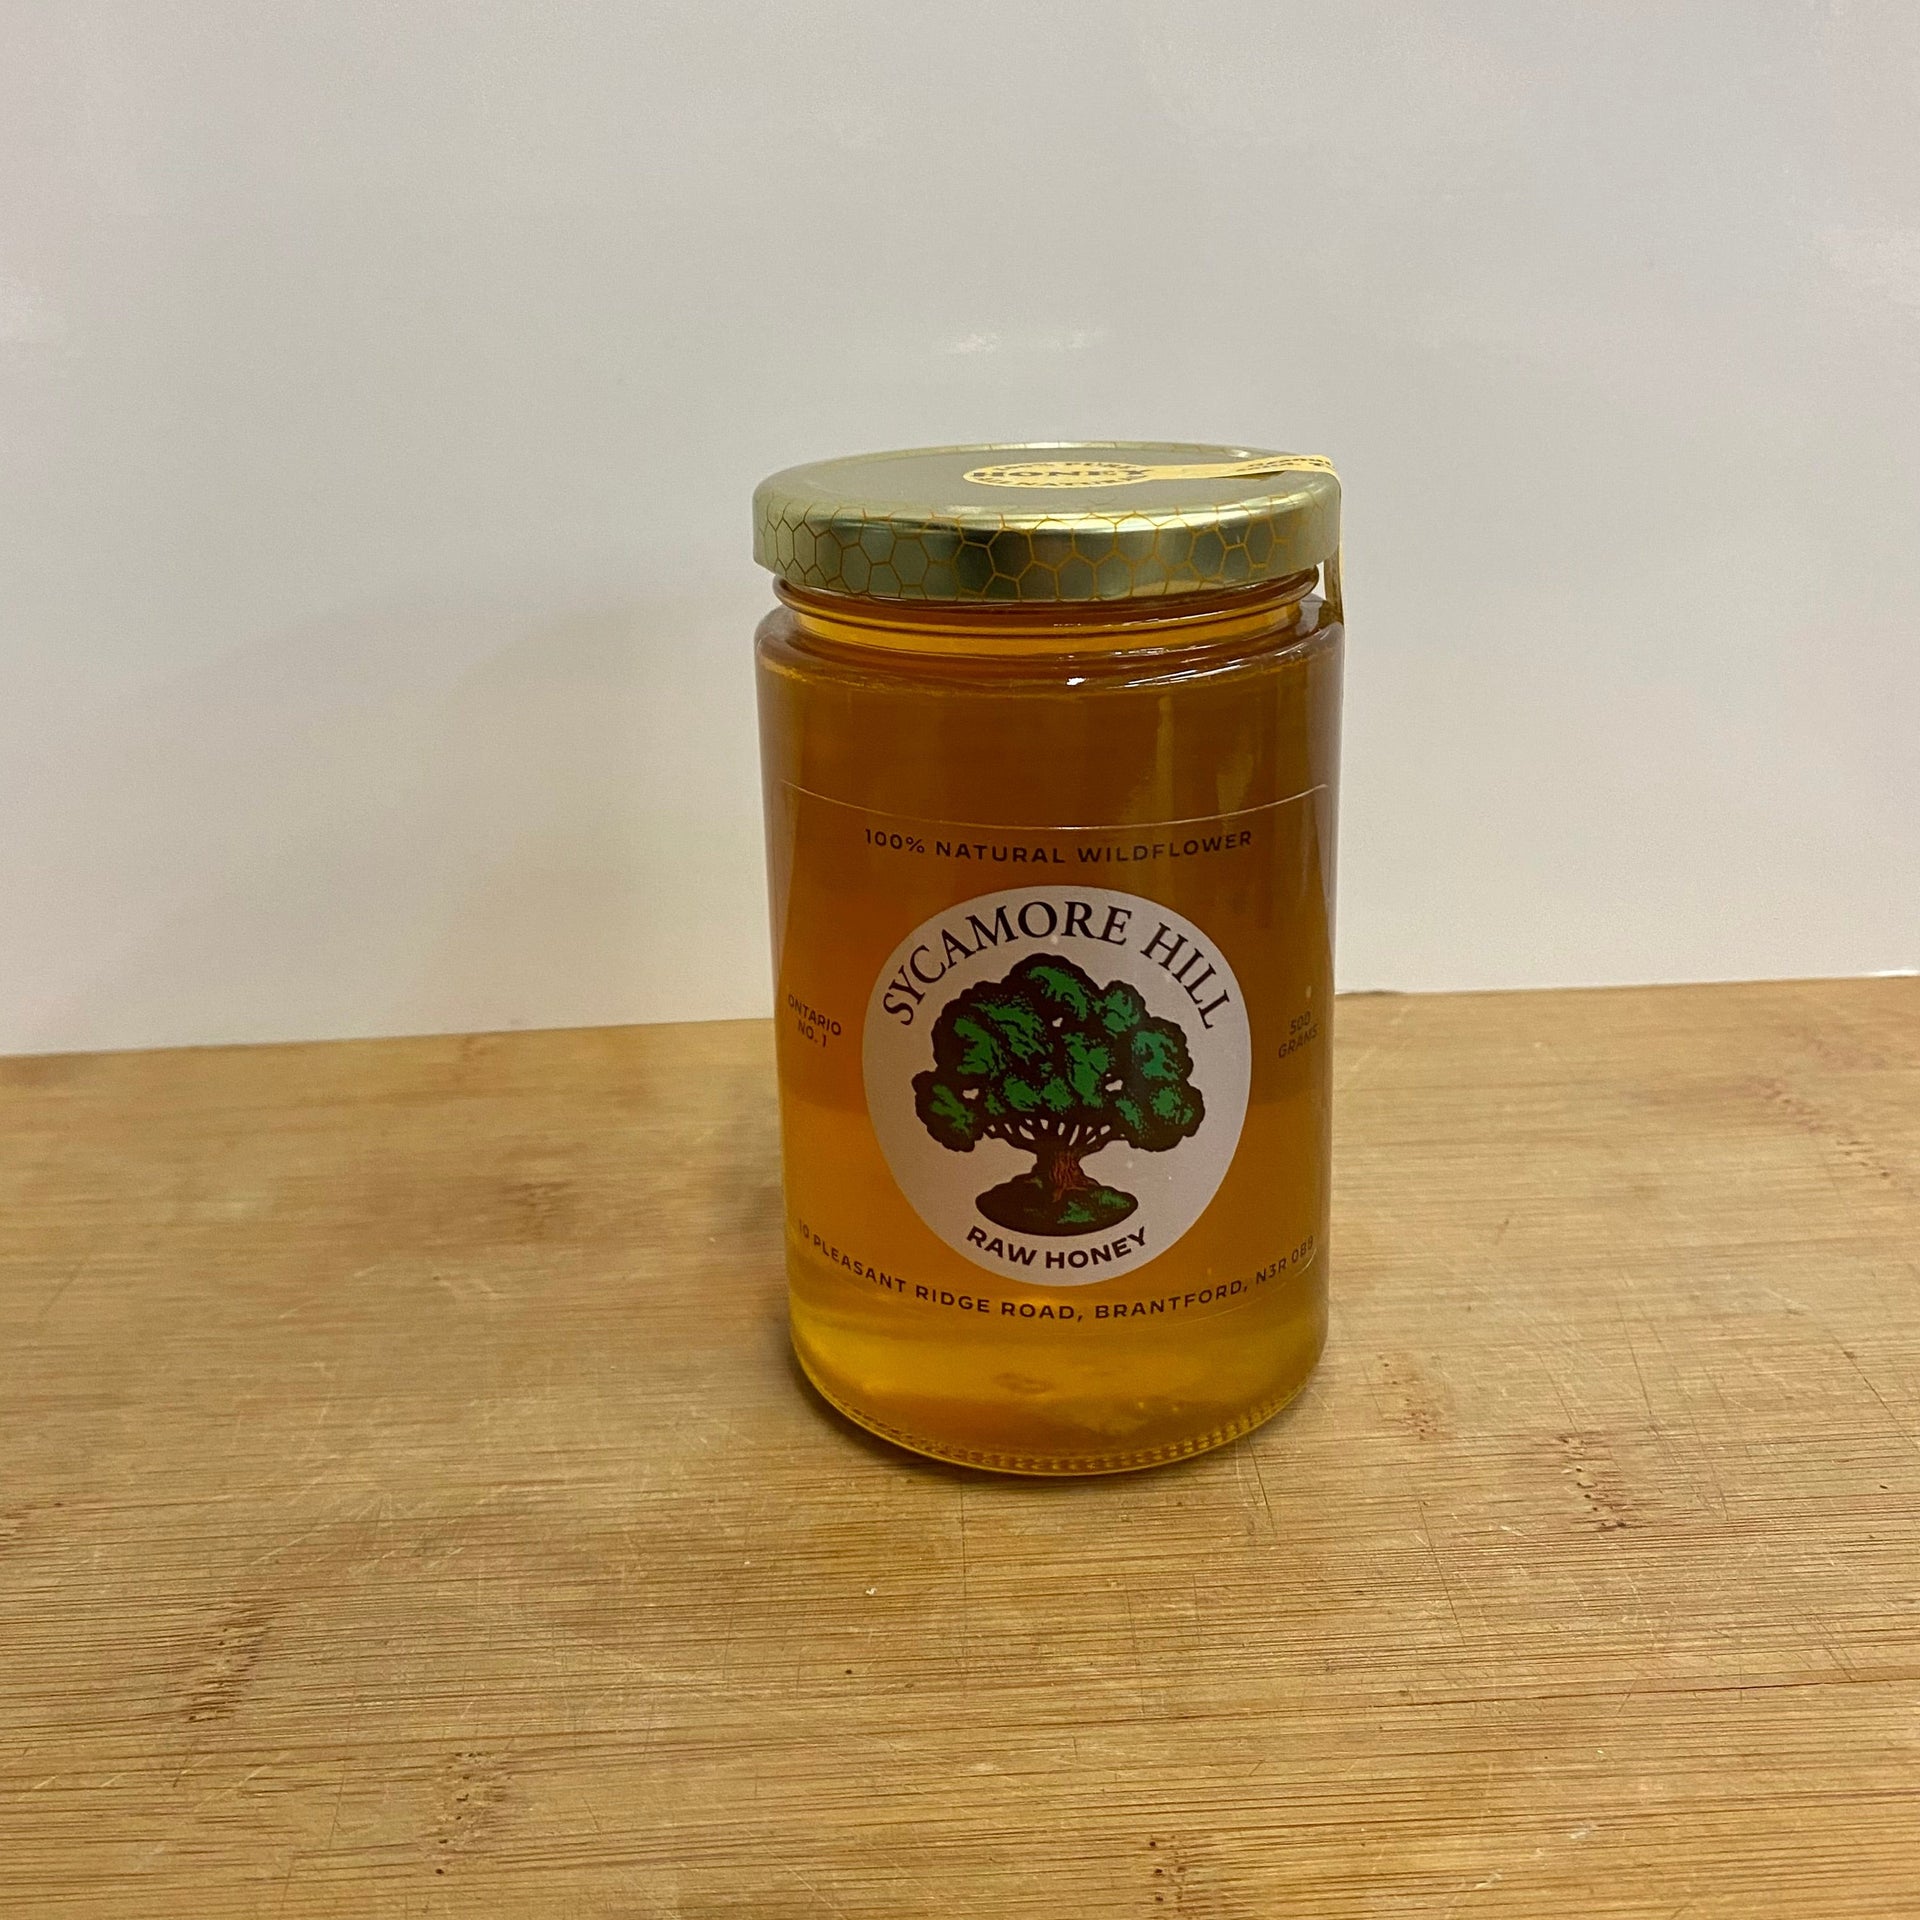 Sycamore Hill Wildflower Honey